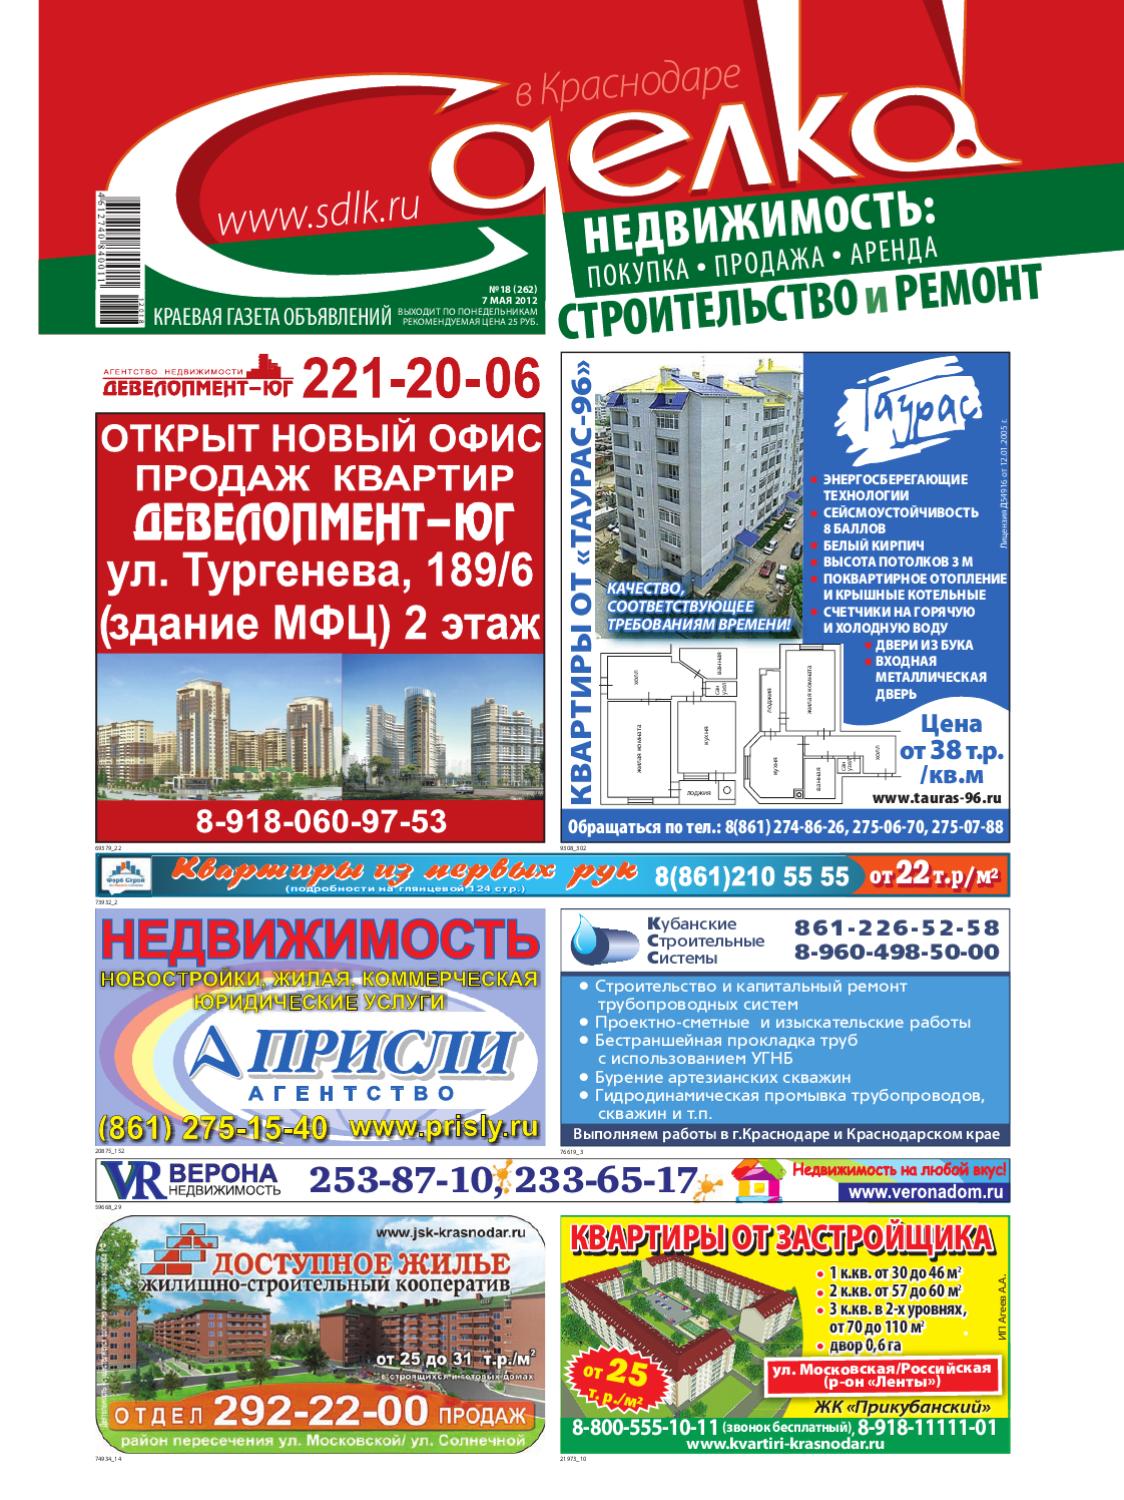 Сделка в Краснодаре №18, май 2012